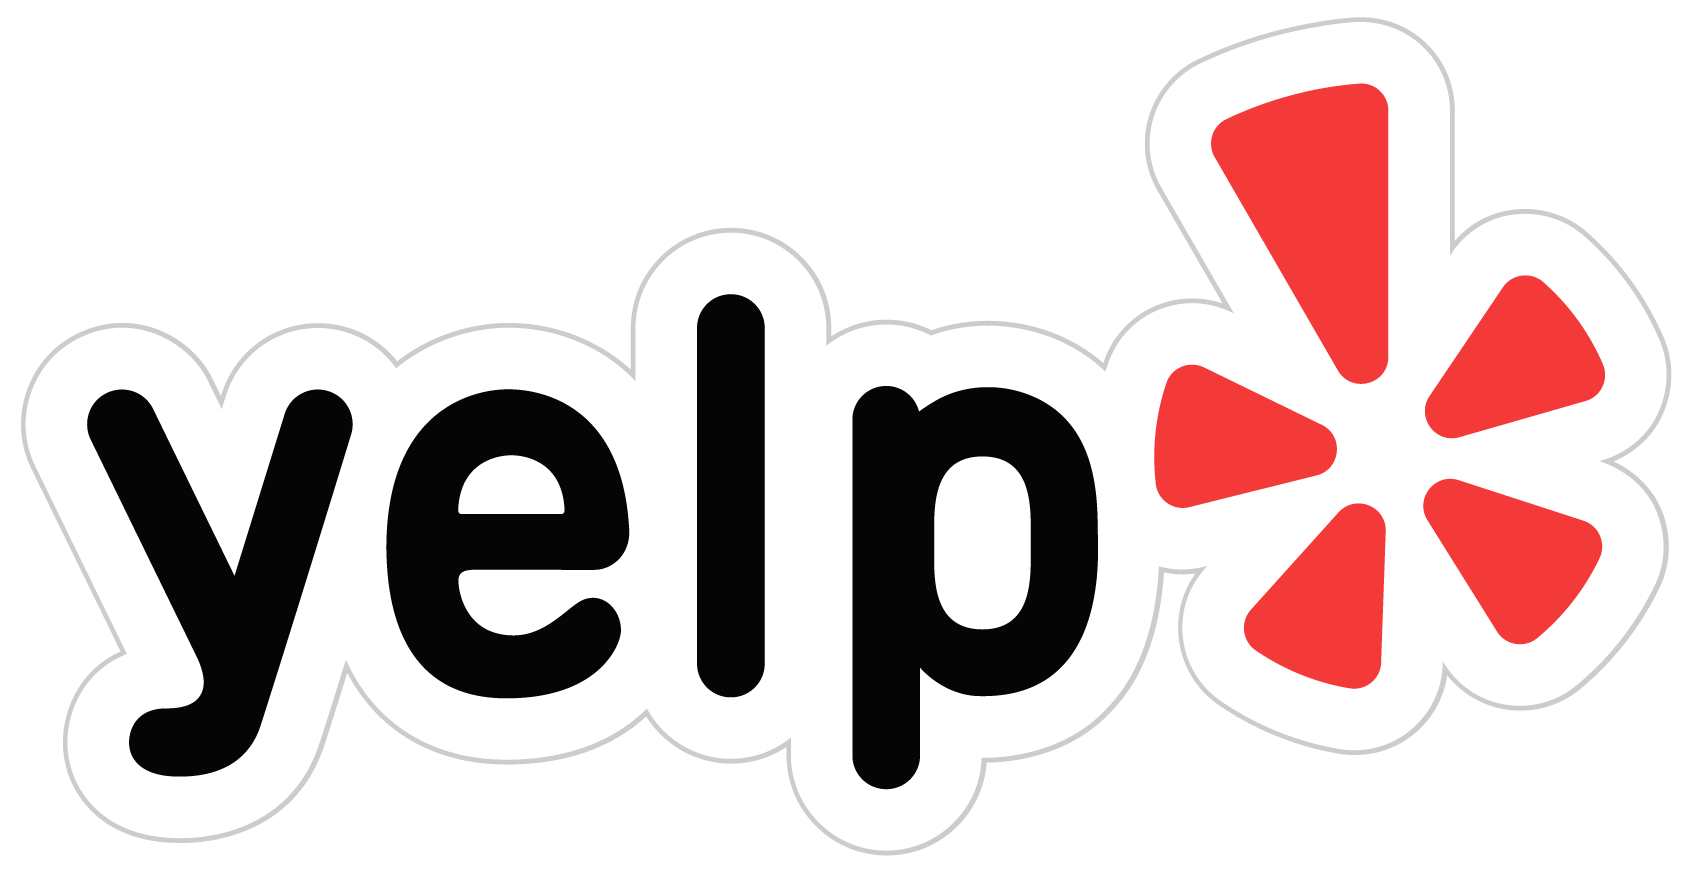 Yelp logo colors